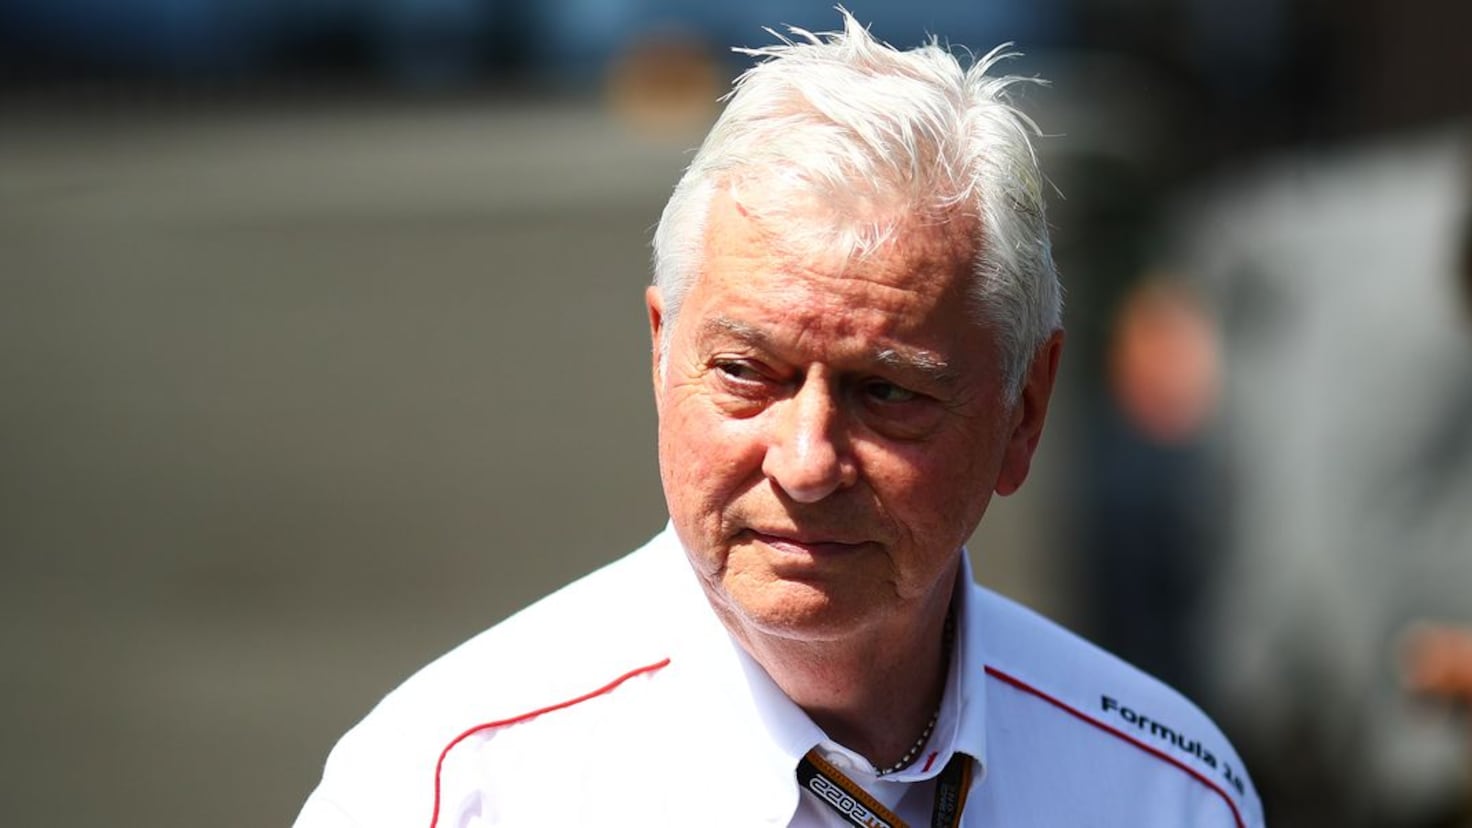 Symonds, jefe técnico de la F1, deja su cargo y ficha por Andretti 